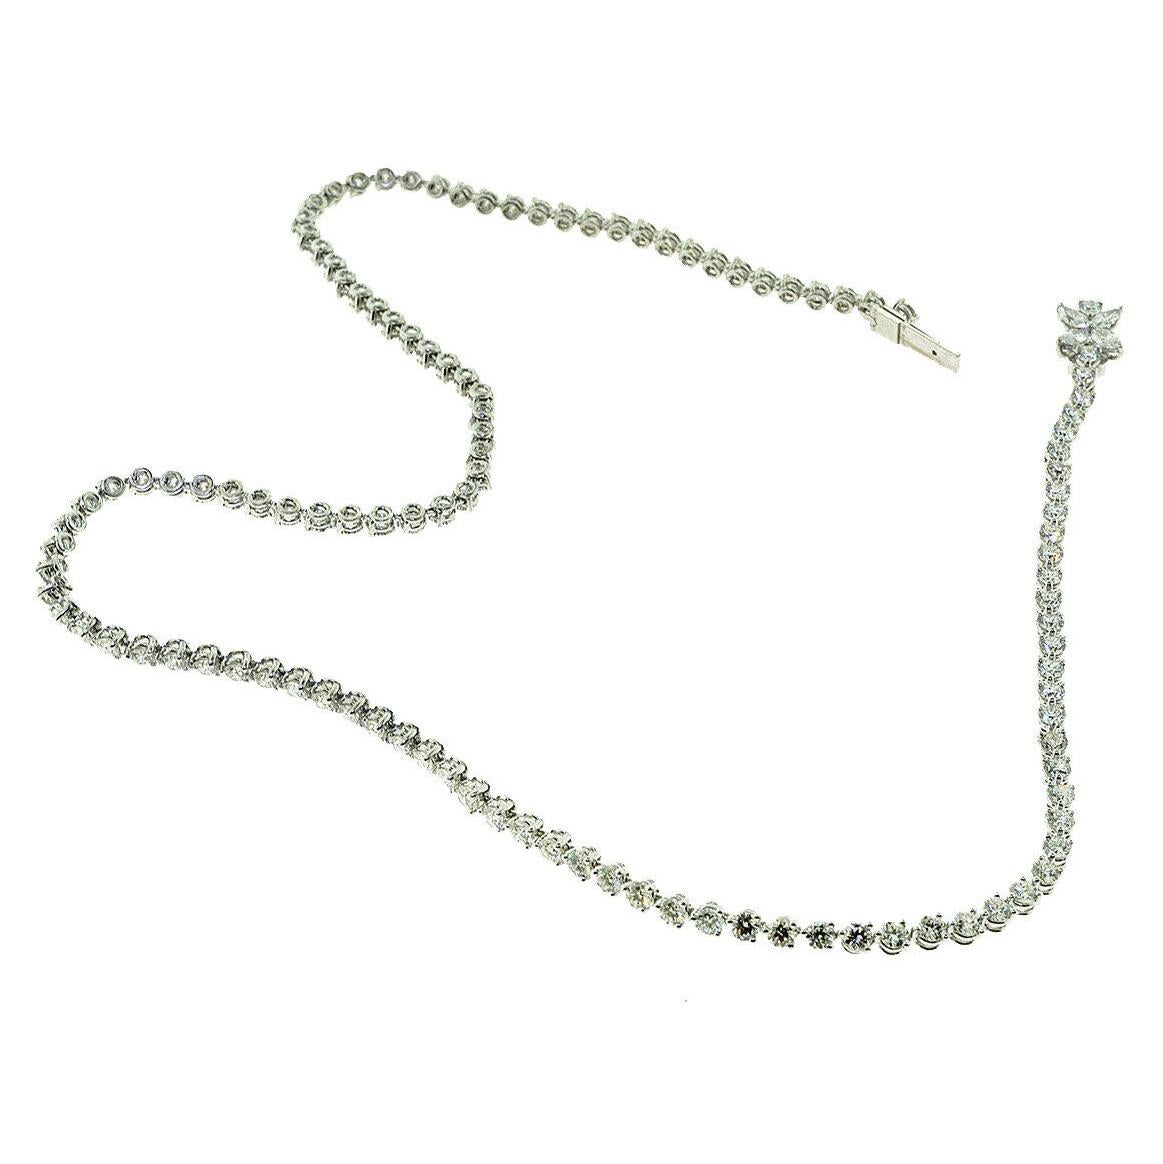 Brilliant Cut 10 Carat Round Diamond Tennis Necklace in White Gold